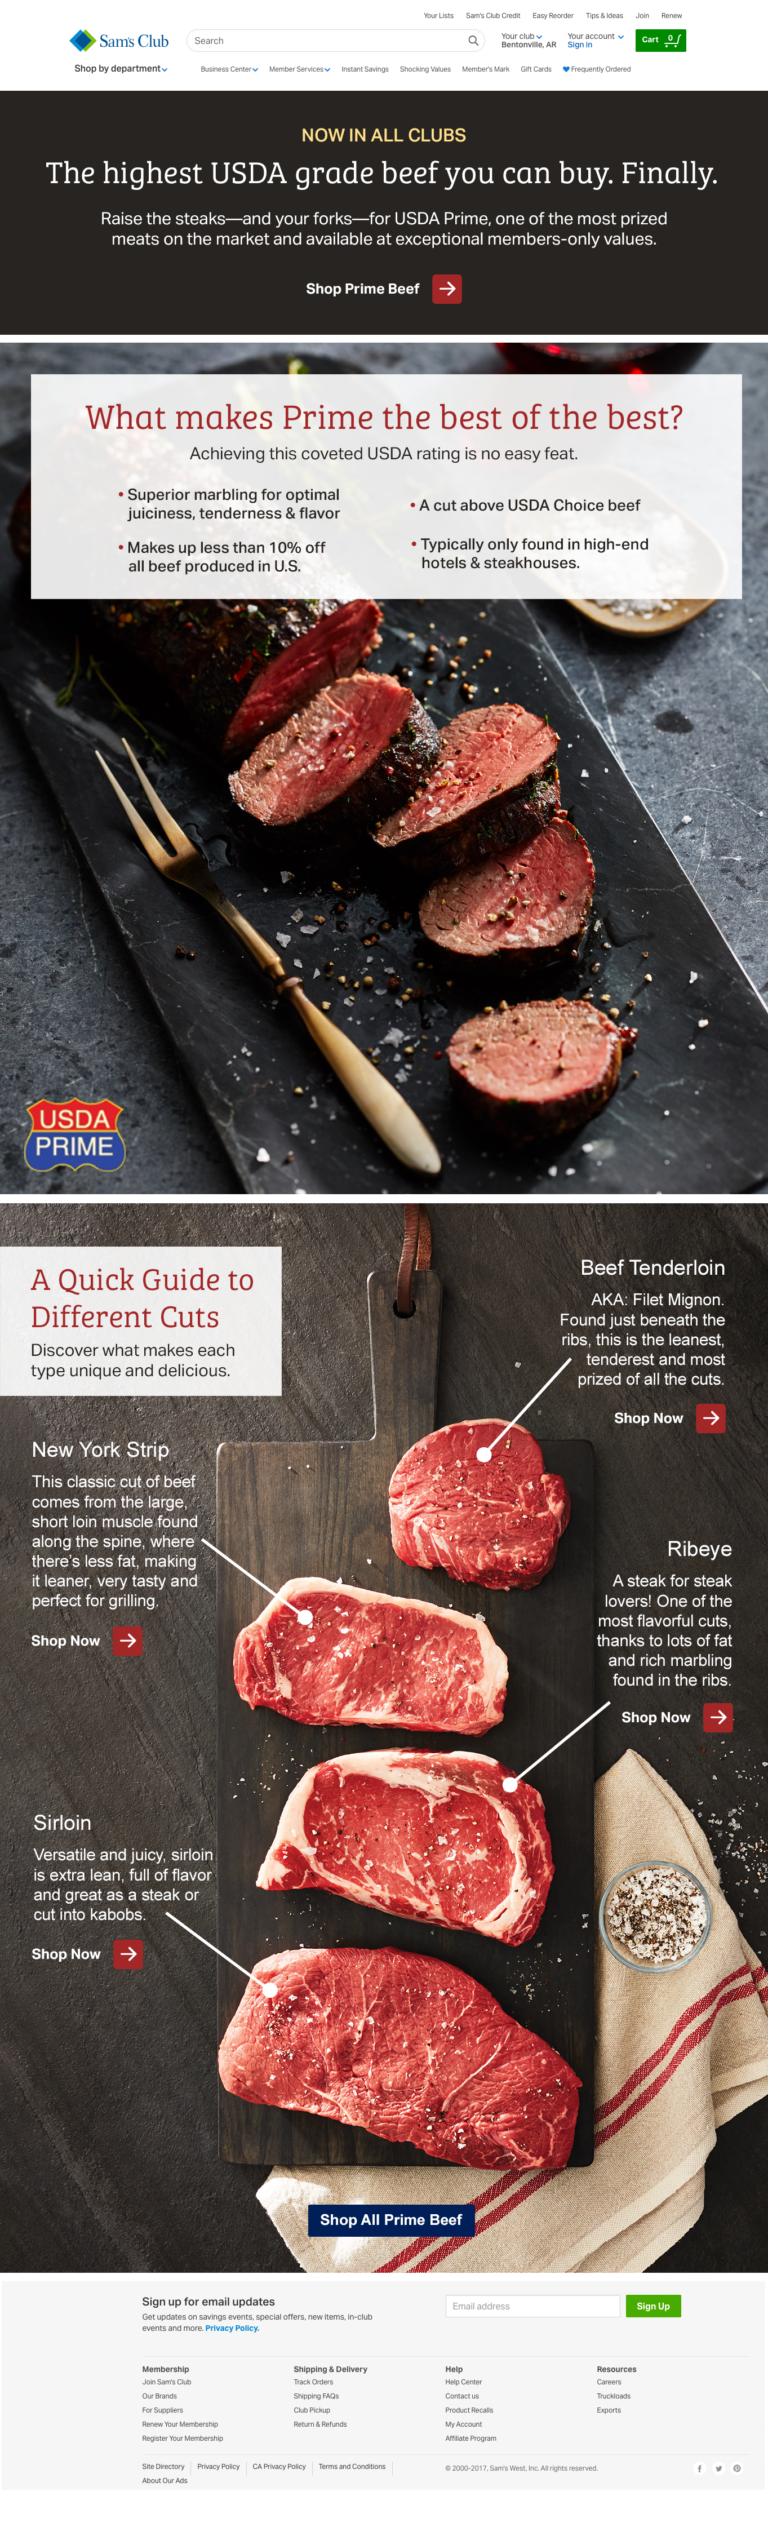 USDA Prime Beef LP